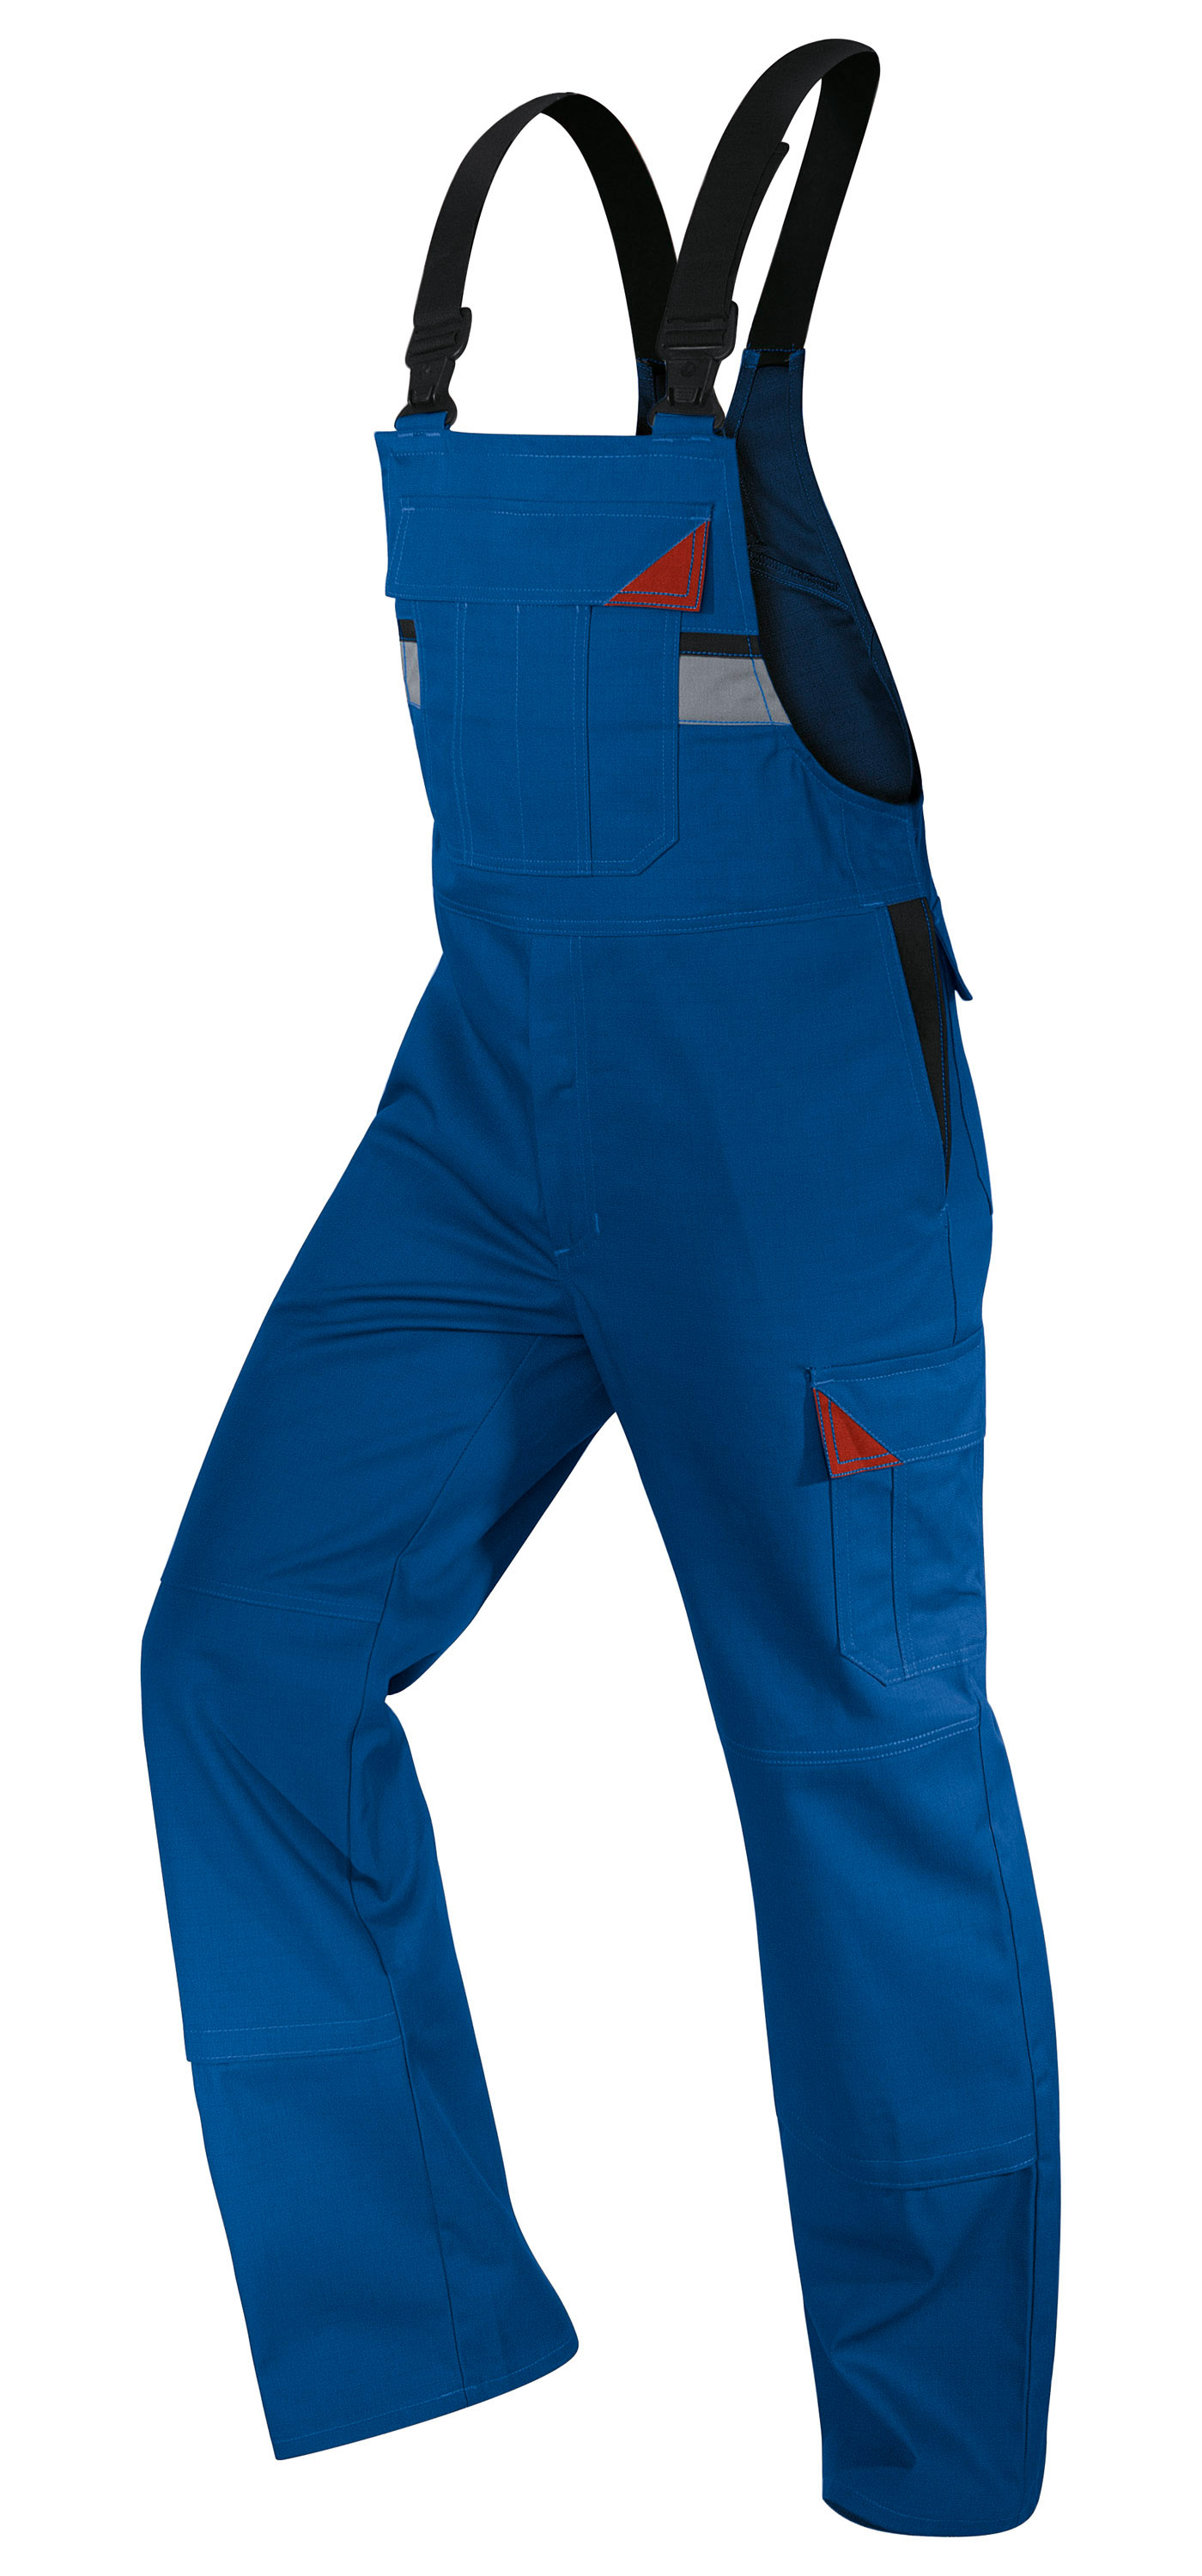 KÜBLER Brand X Protect Latzhose Arbeitslatzhose Berufslatzhose Workerhose Arbeitshose Berufshose Blaumann kornblau rot ca 350g